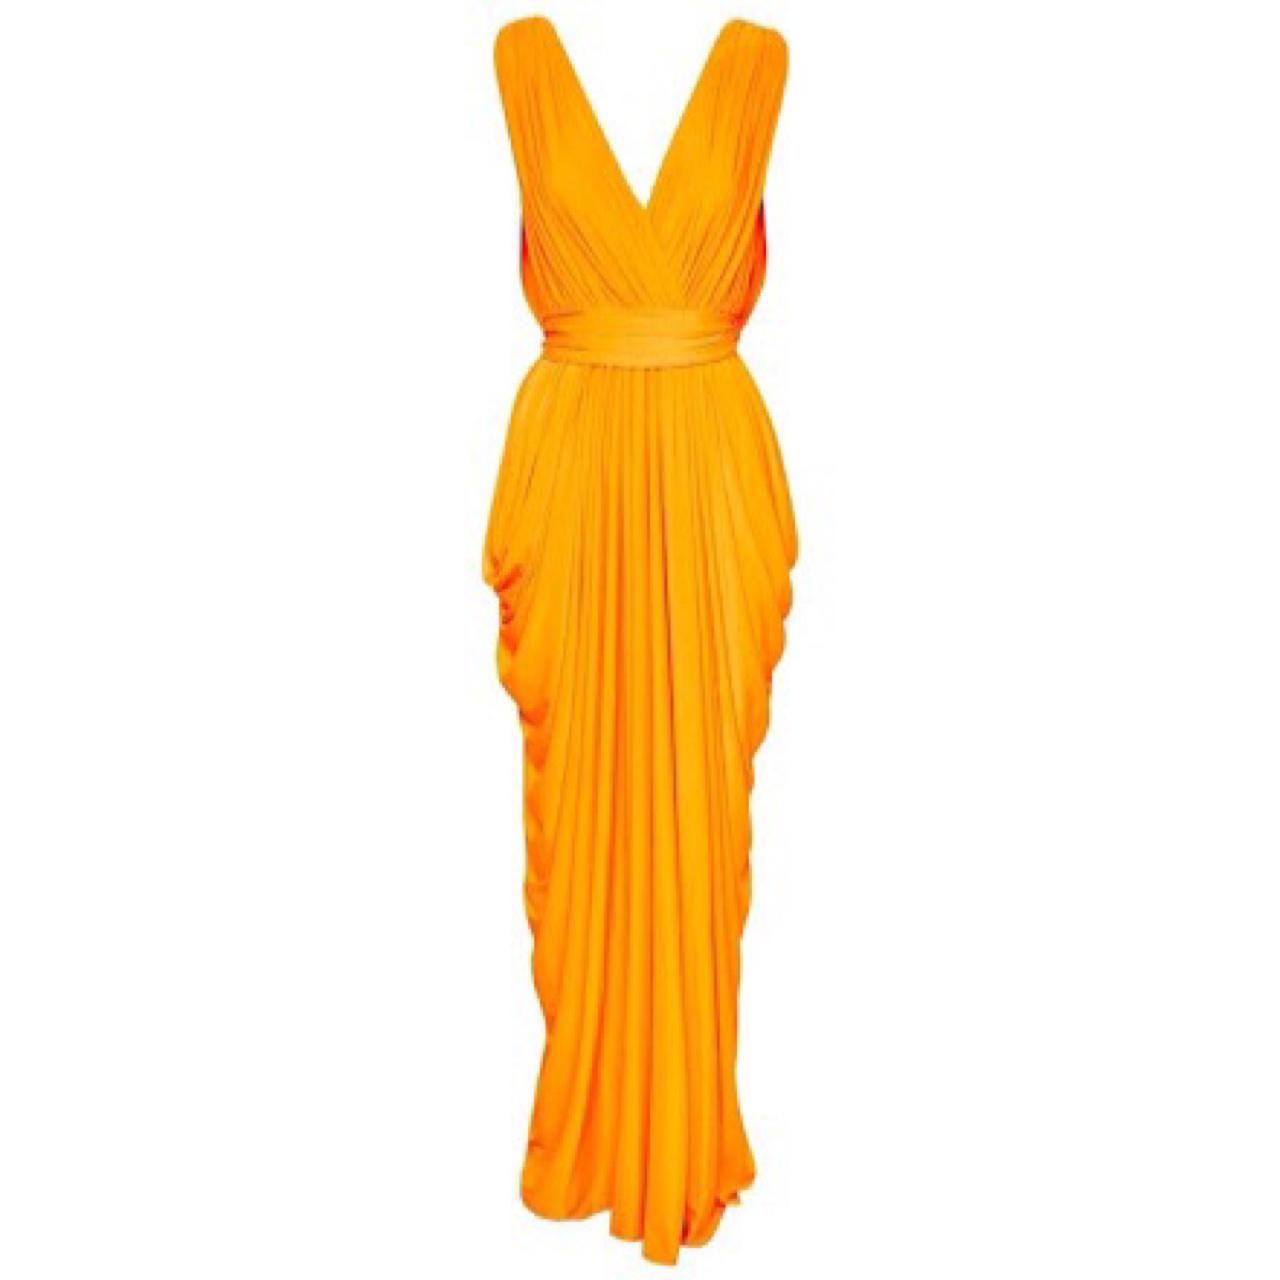 Sheike maxi dress, orange. Can be worn two ways v... - Depop